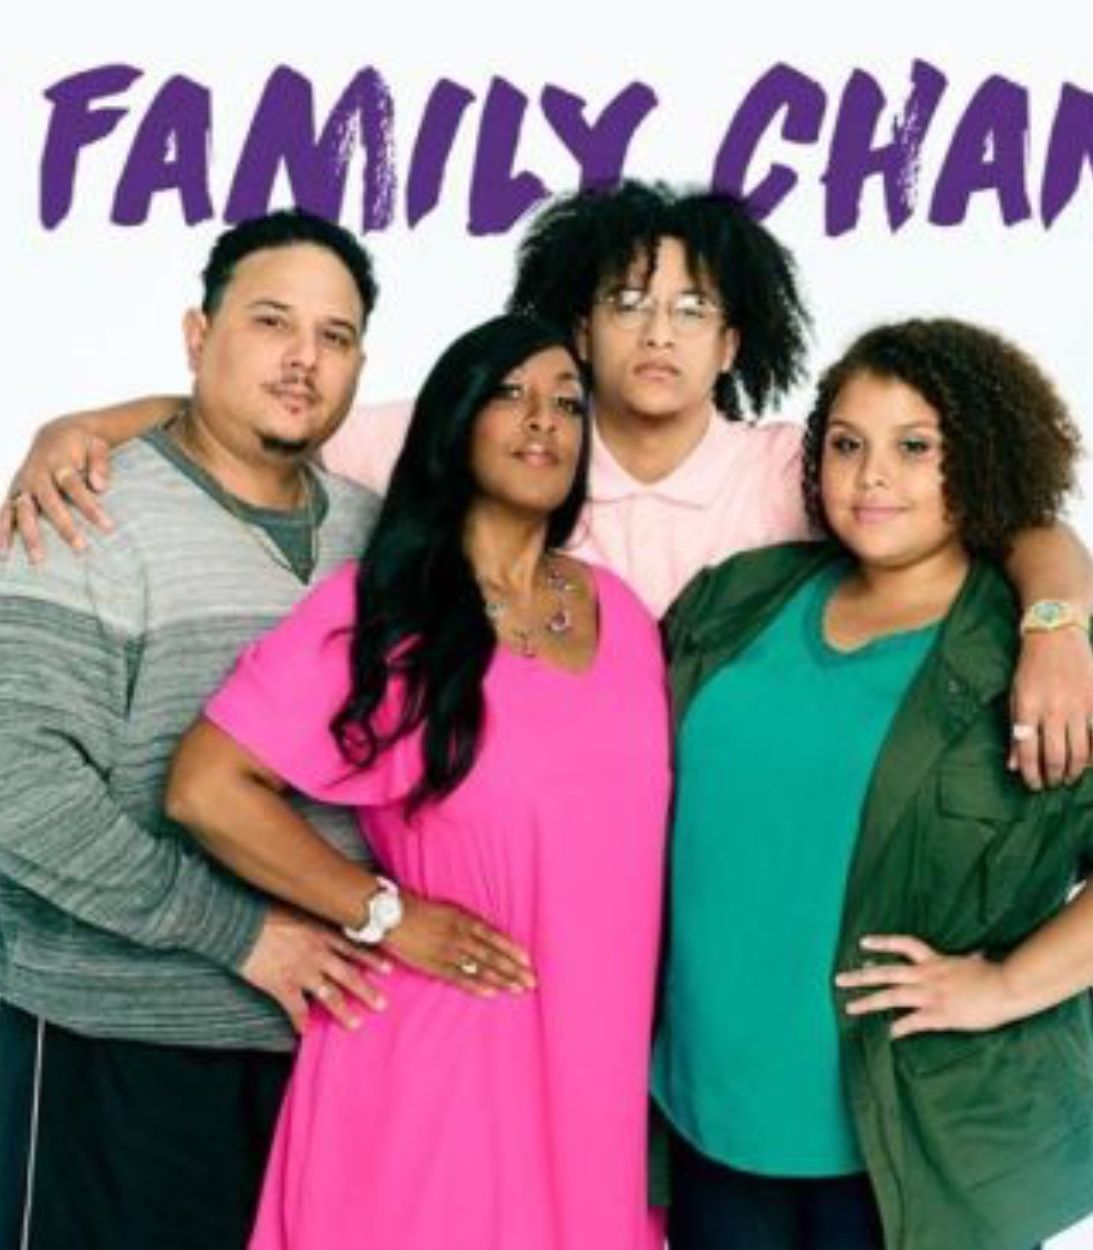 The Family Chantel